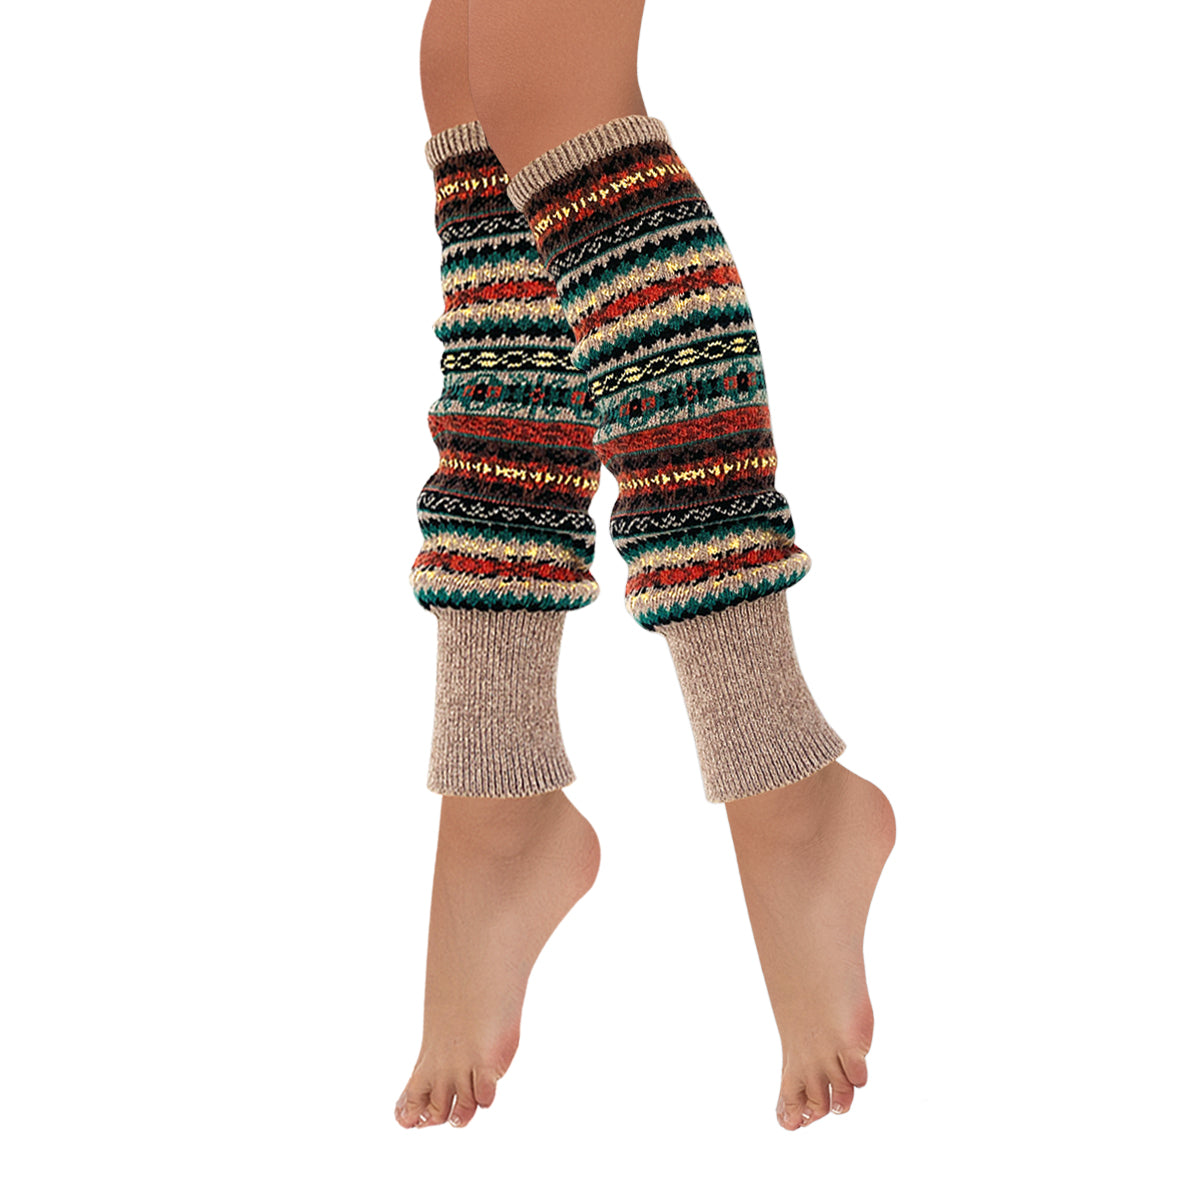 Wrapables Women's Bohemian Winter Warm Long Leg Warmers, Knee High Boo